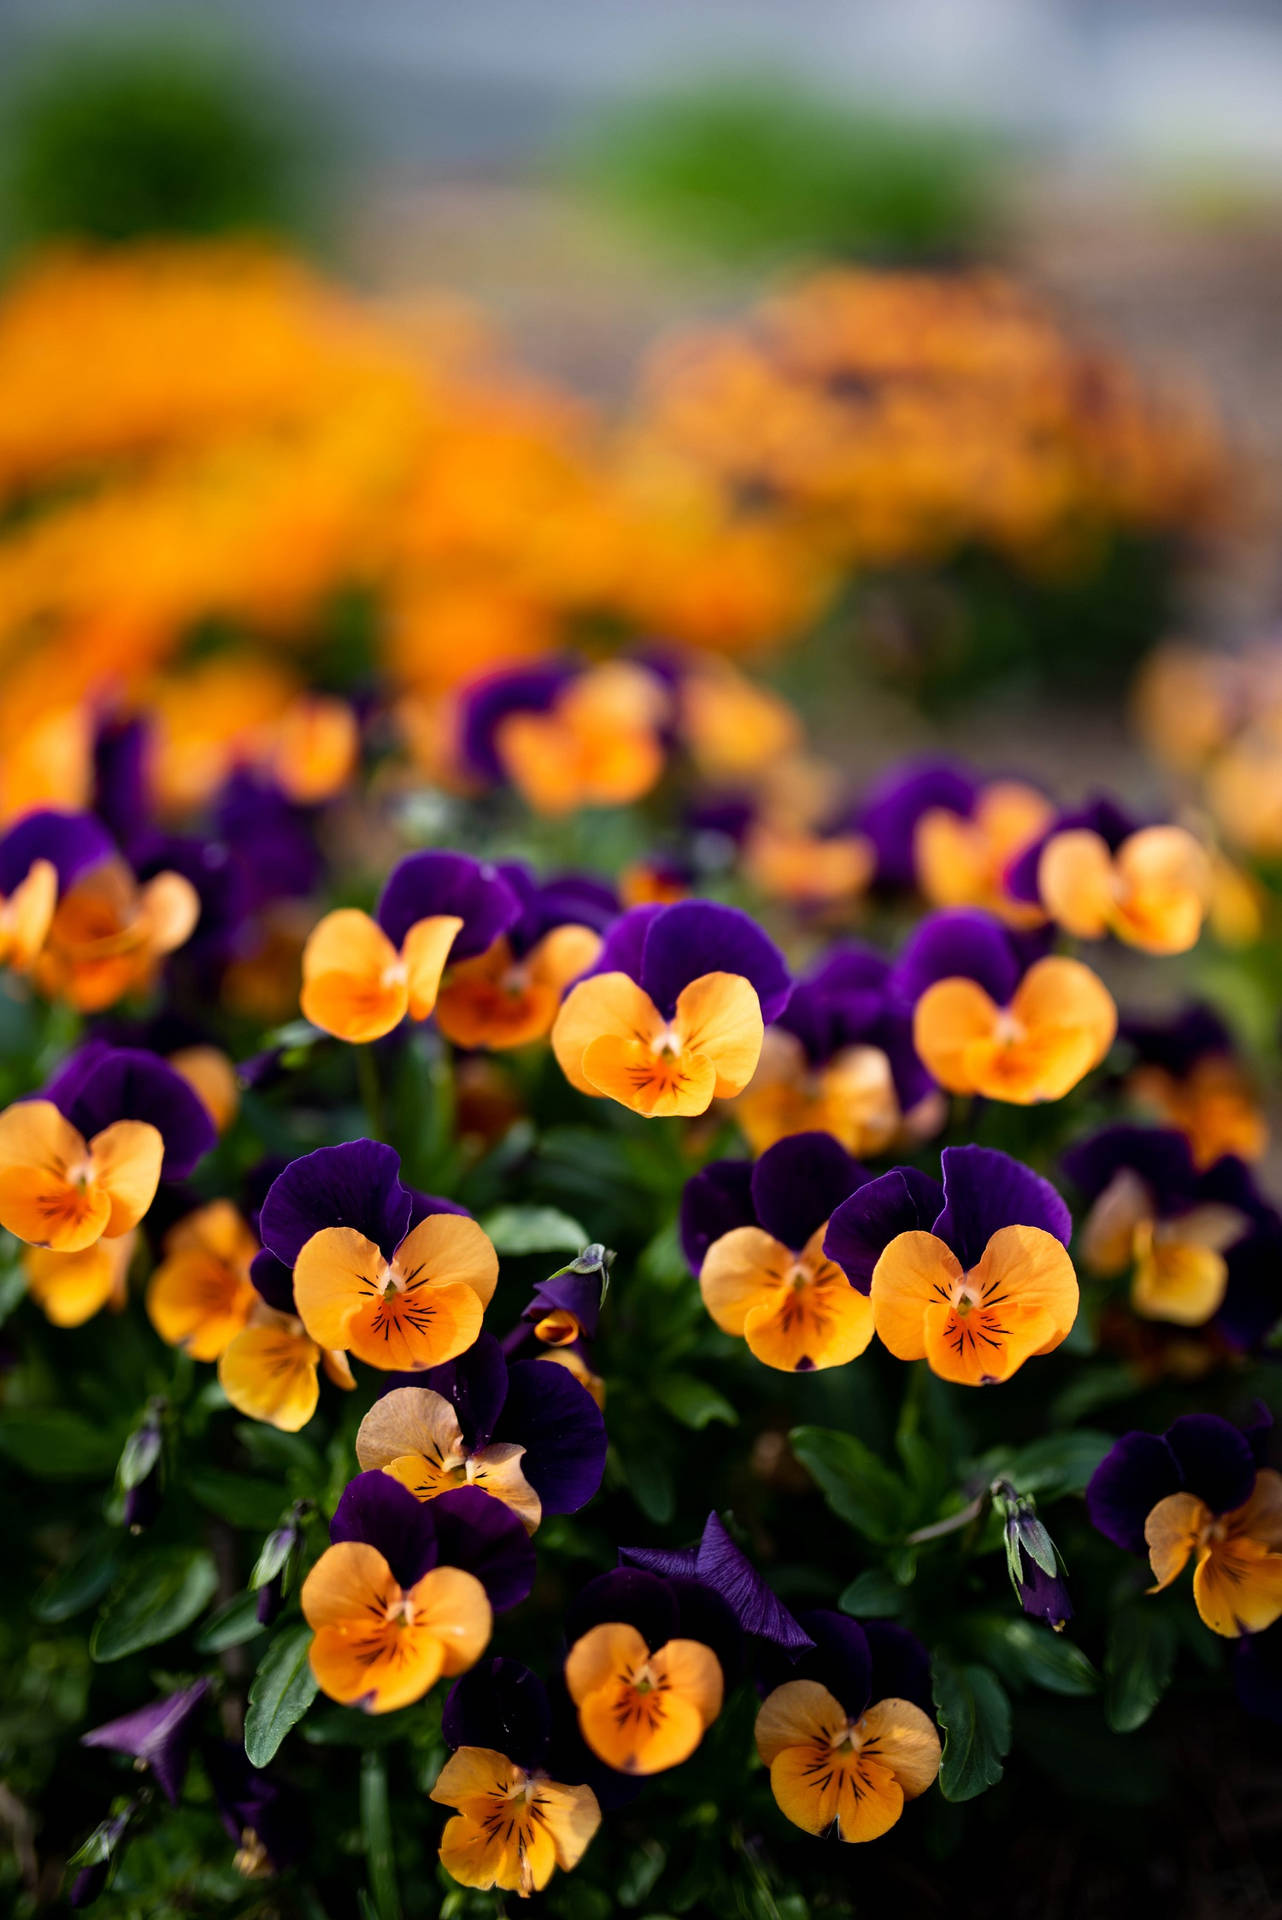 Mixed Purple-Yellow Pansy Garden Wallpaper